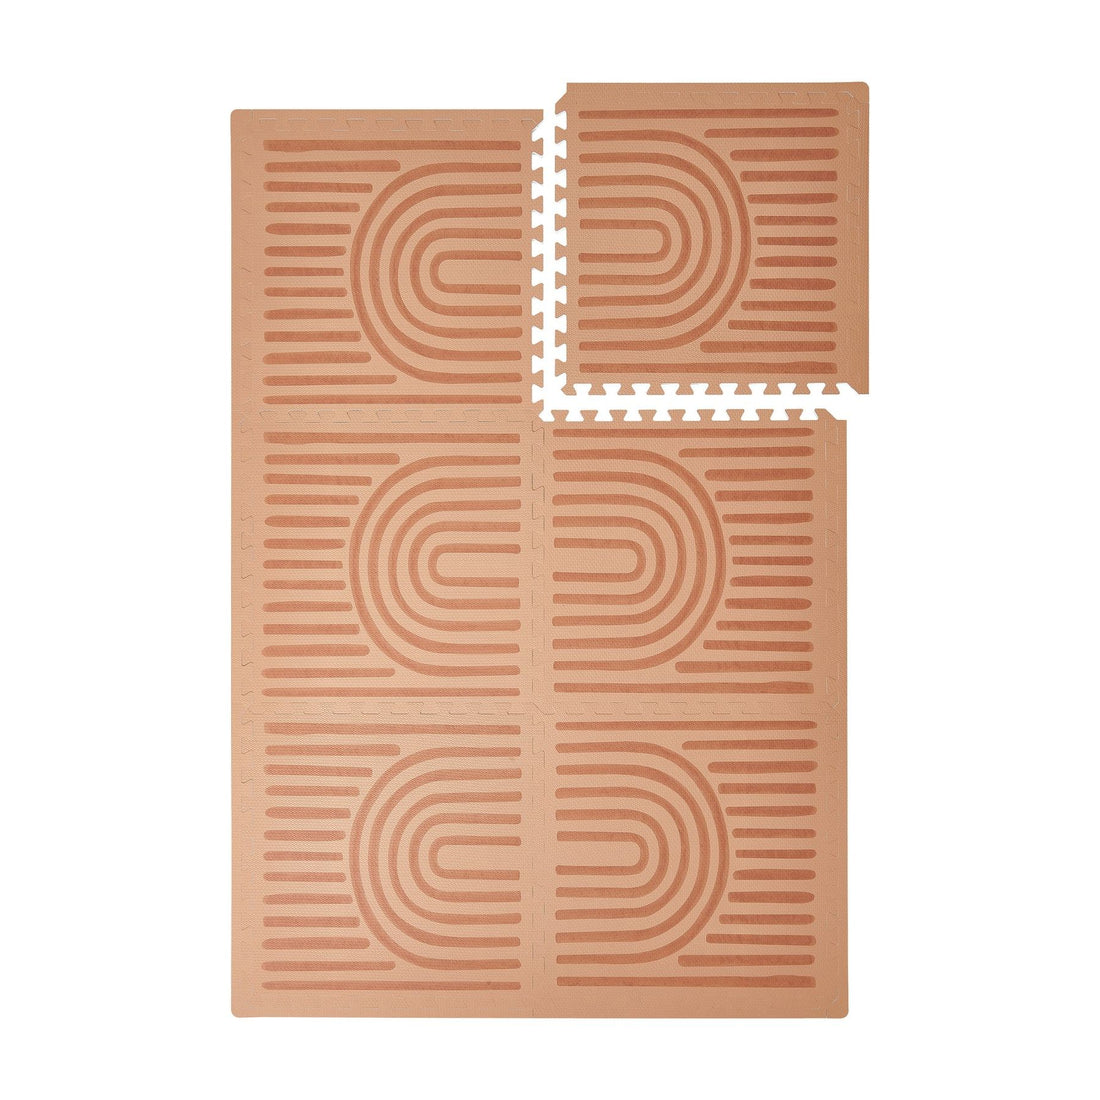 Toddlekind Prettier Puzzle Playmat Linear Camel 120x180cm - 6 Tiles & 12 Edging Borders